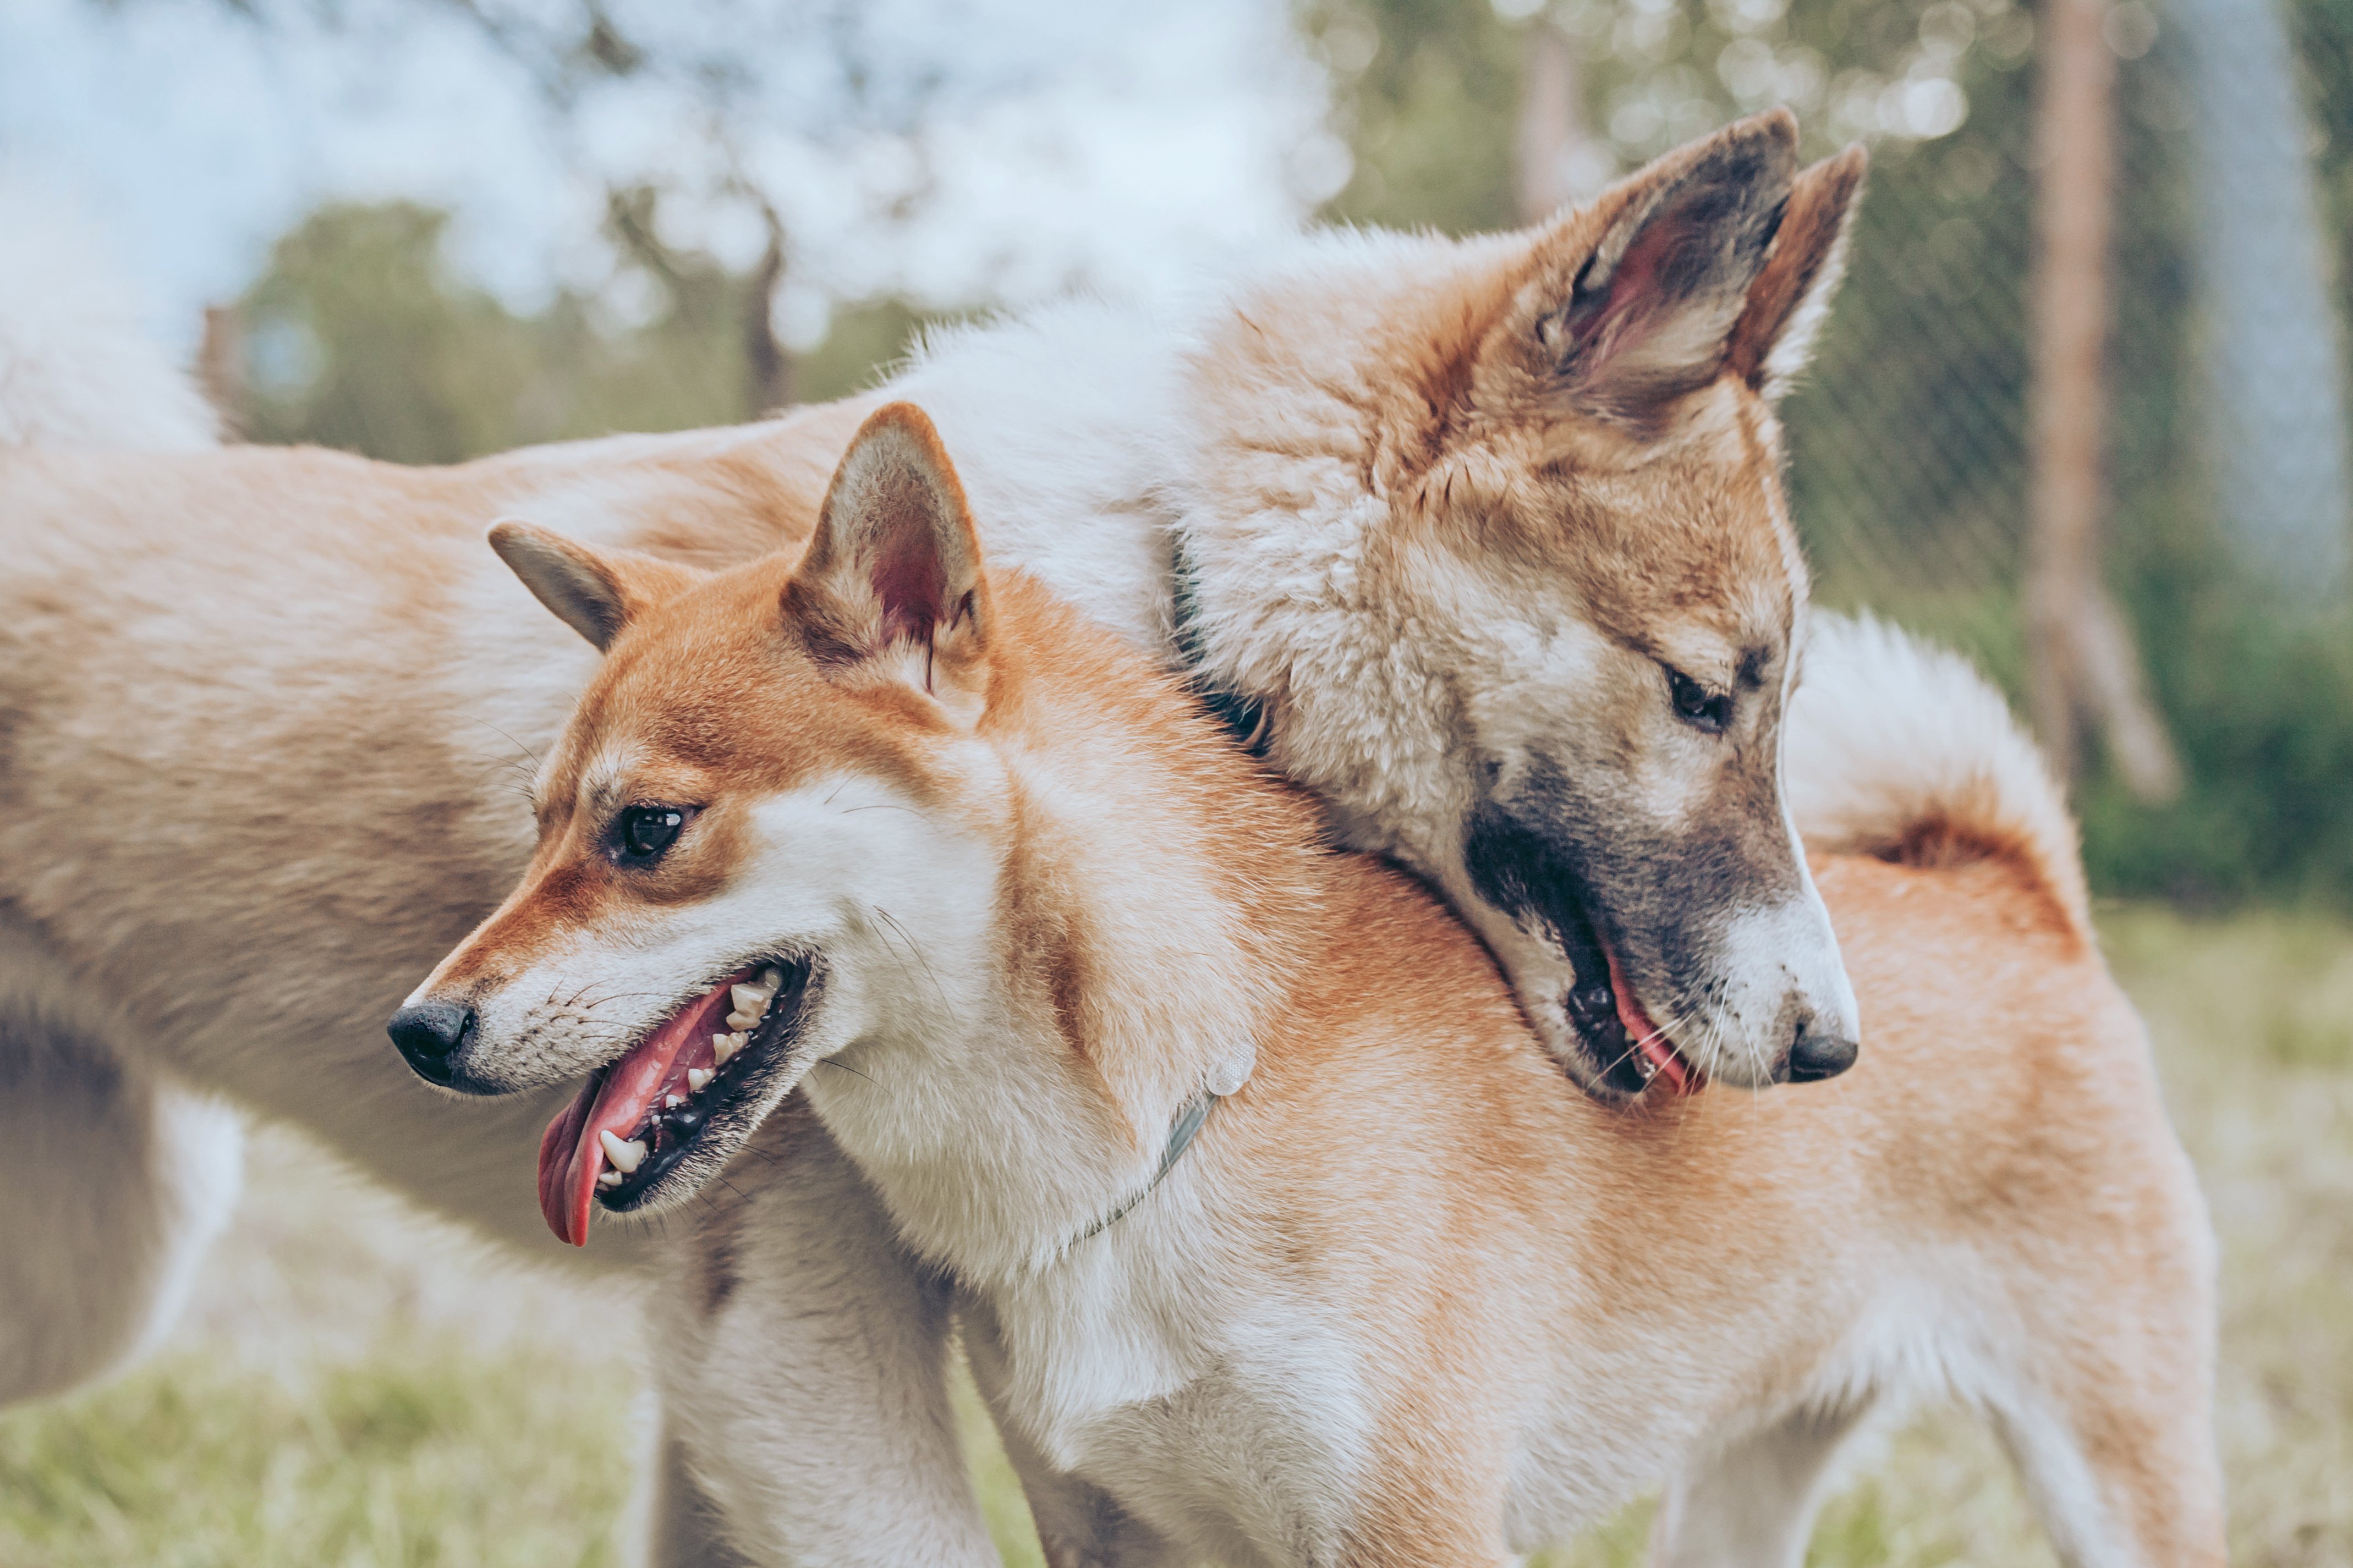 Zwei Hunde umarmen sich liebevoll | Quelle: Shutterstock